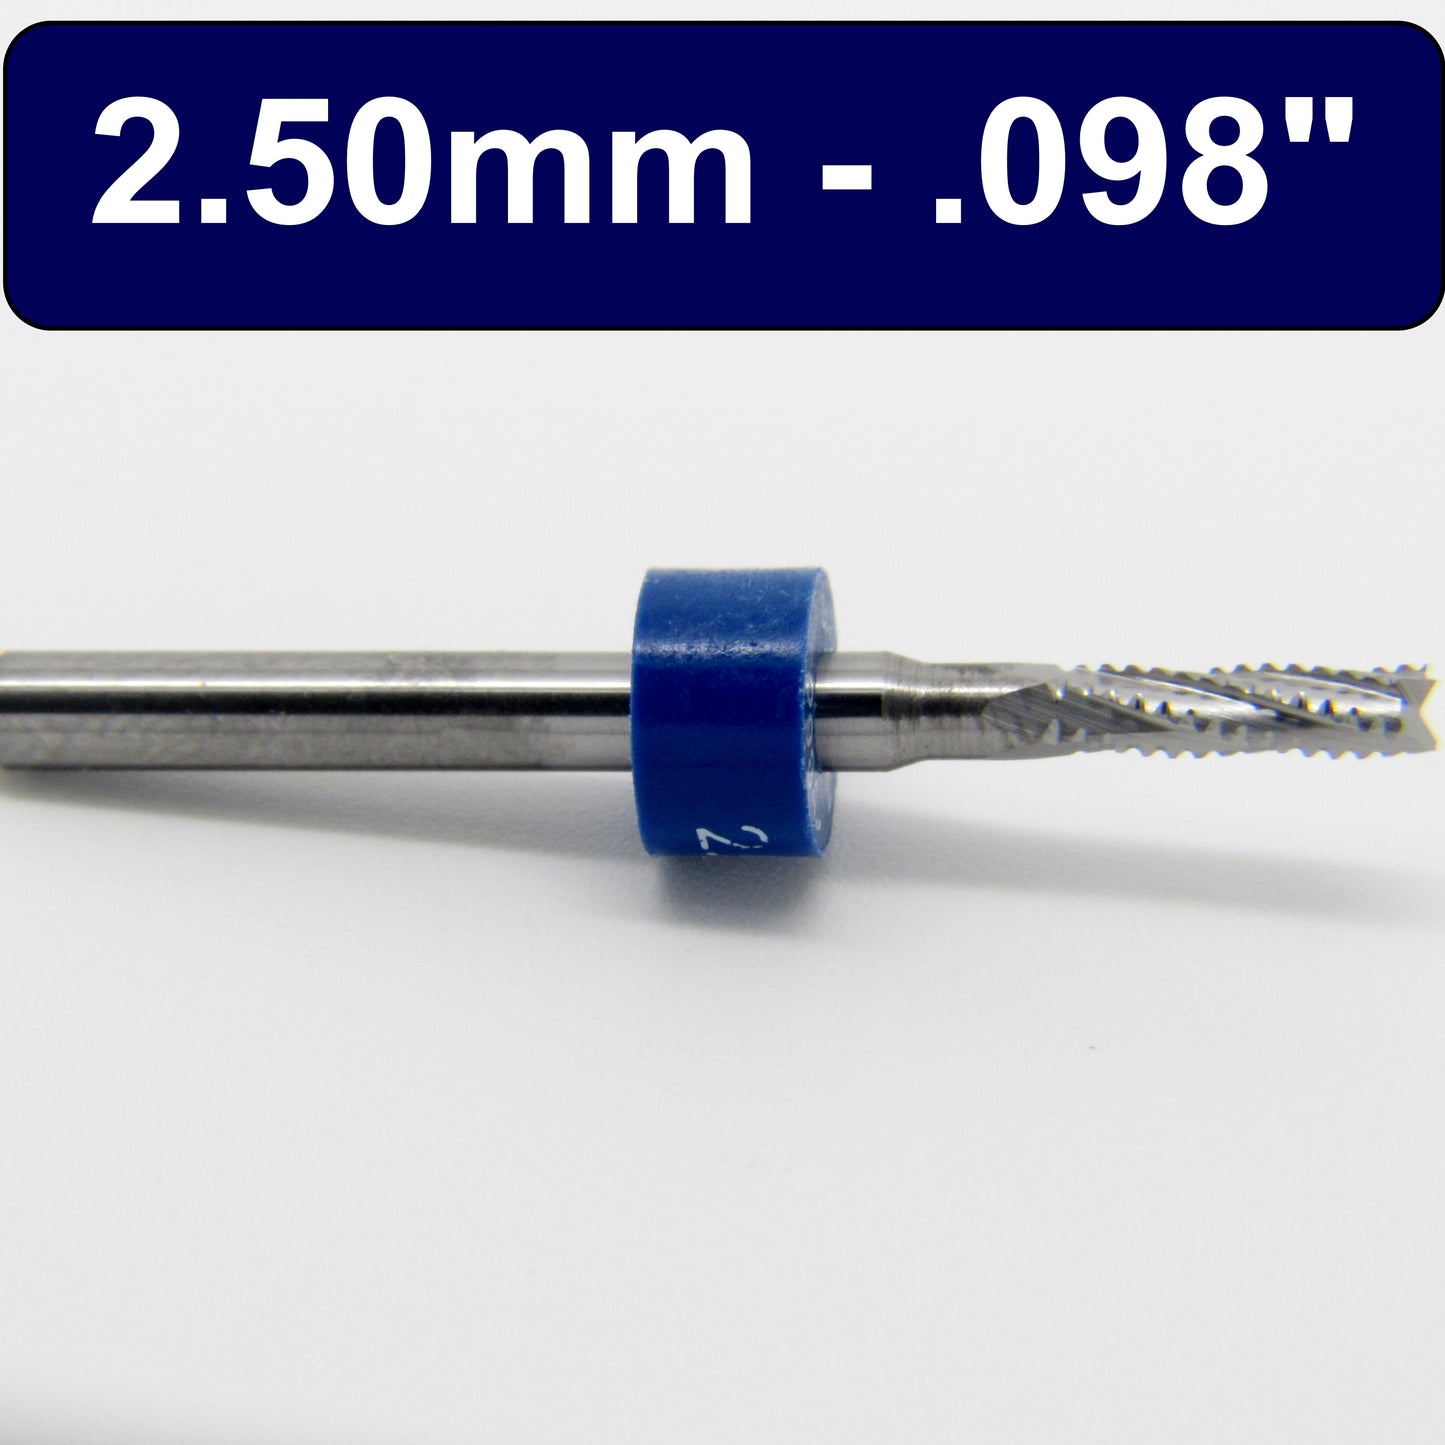 .098" 2.50mm Chip Breaker Flutes Fish Tail Tip Carbide Router URC171